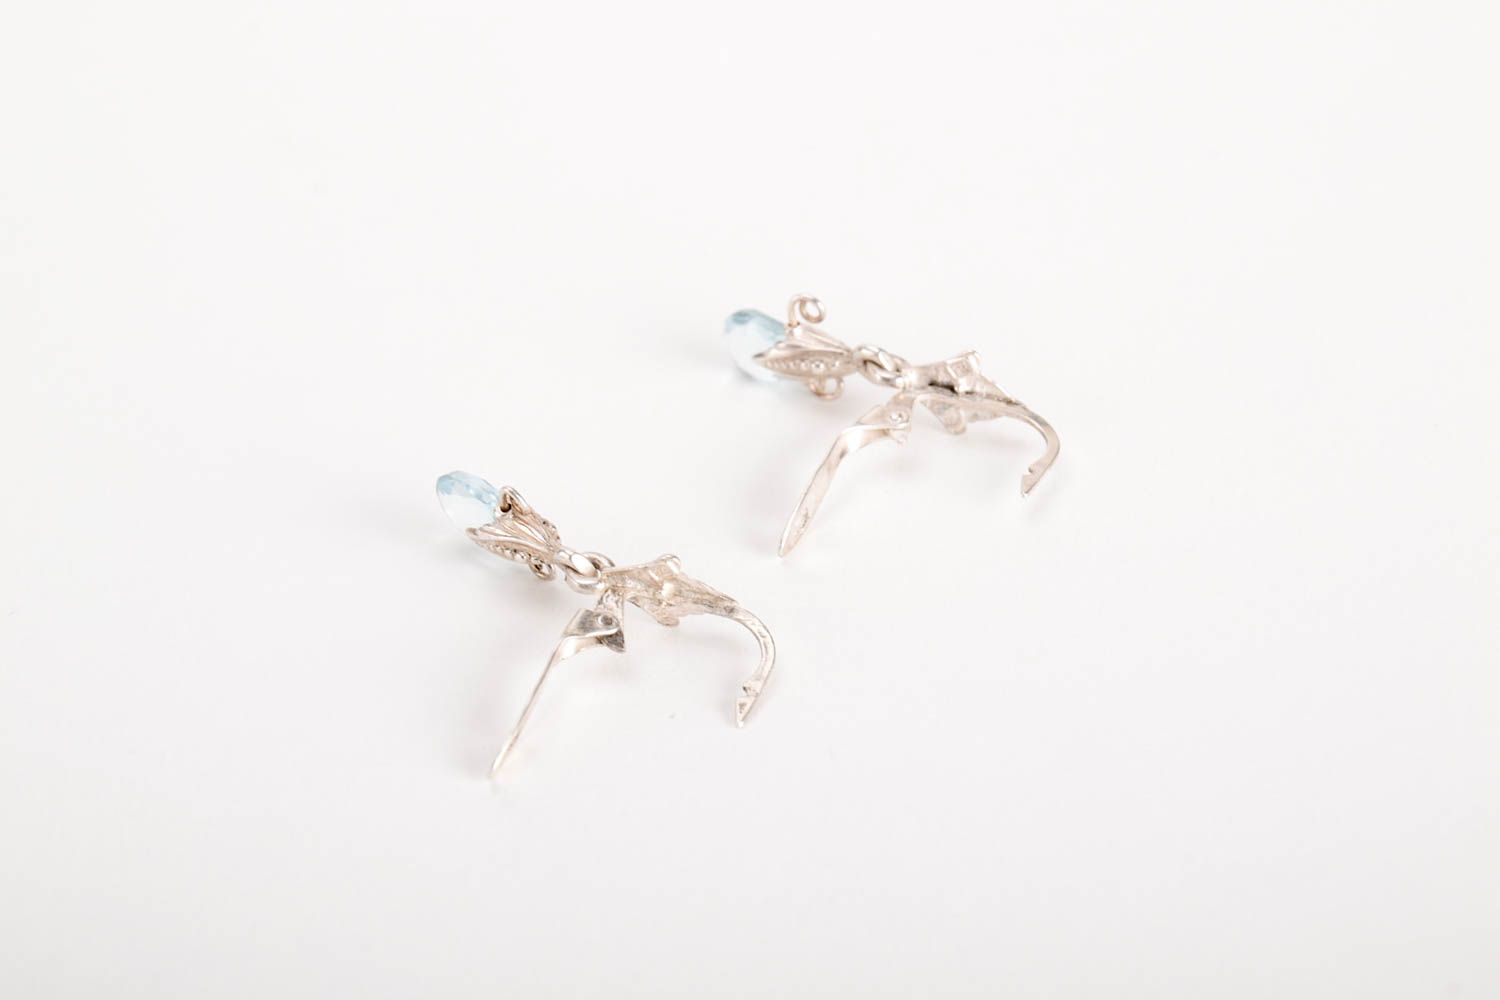 Unique earrings handmade jewelry silver earrings fashion accessories gift ideas photo 3